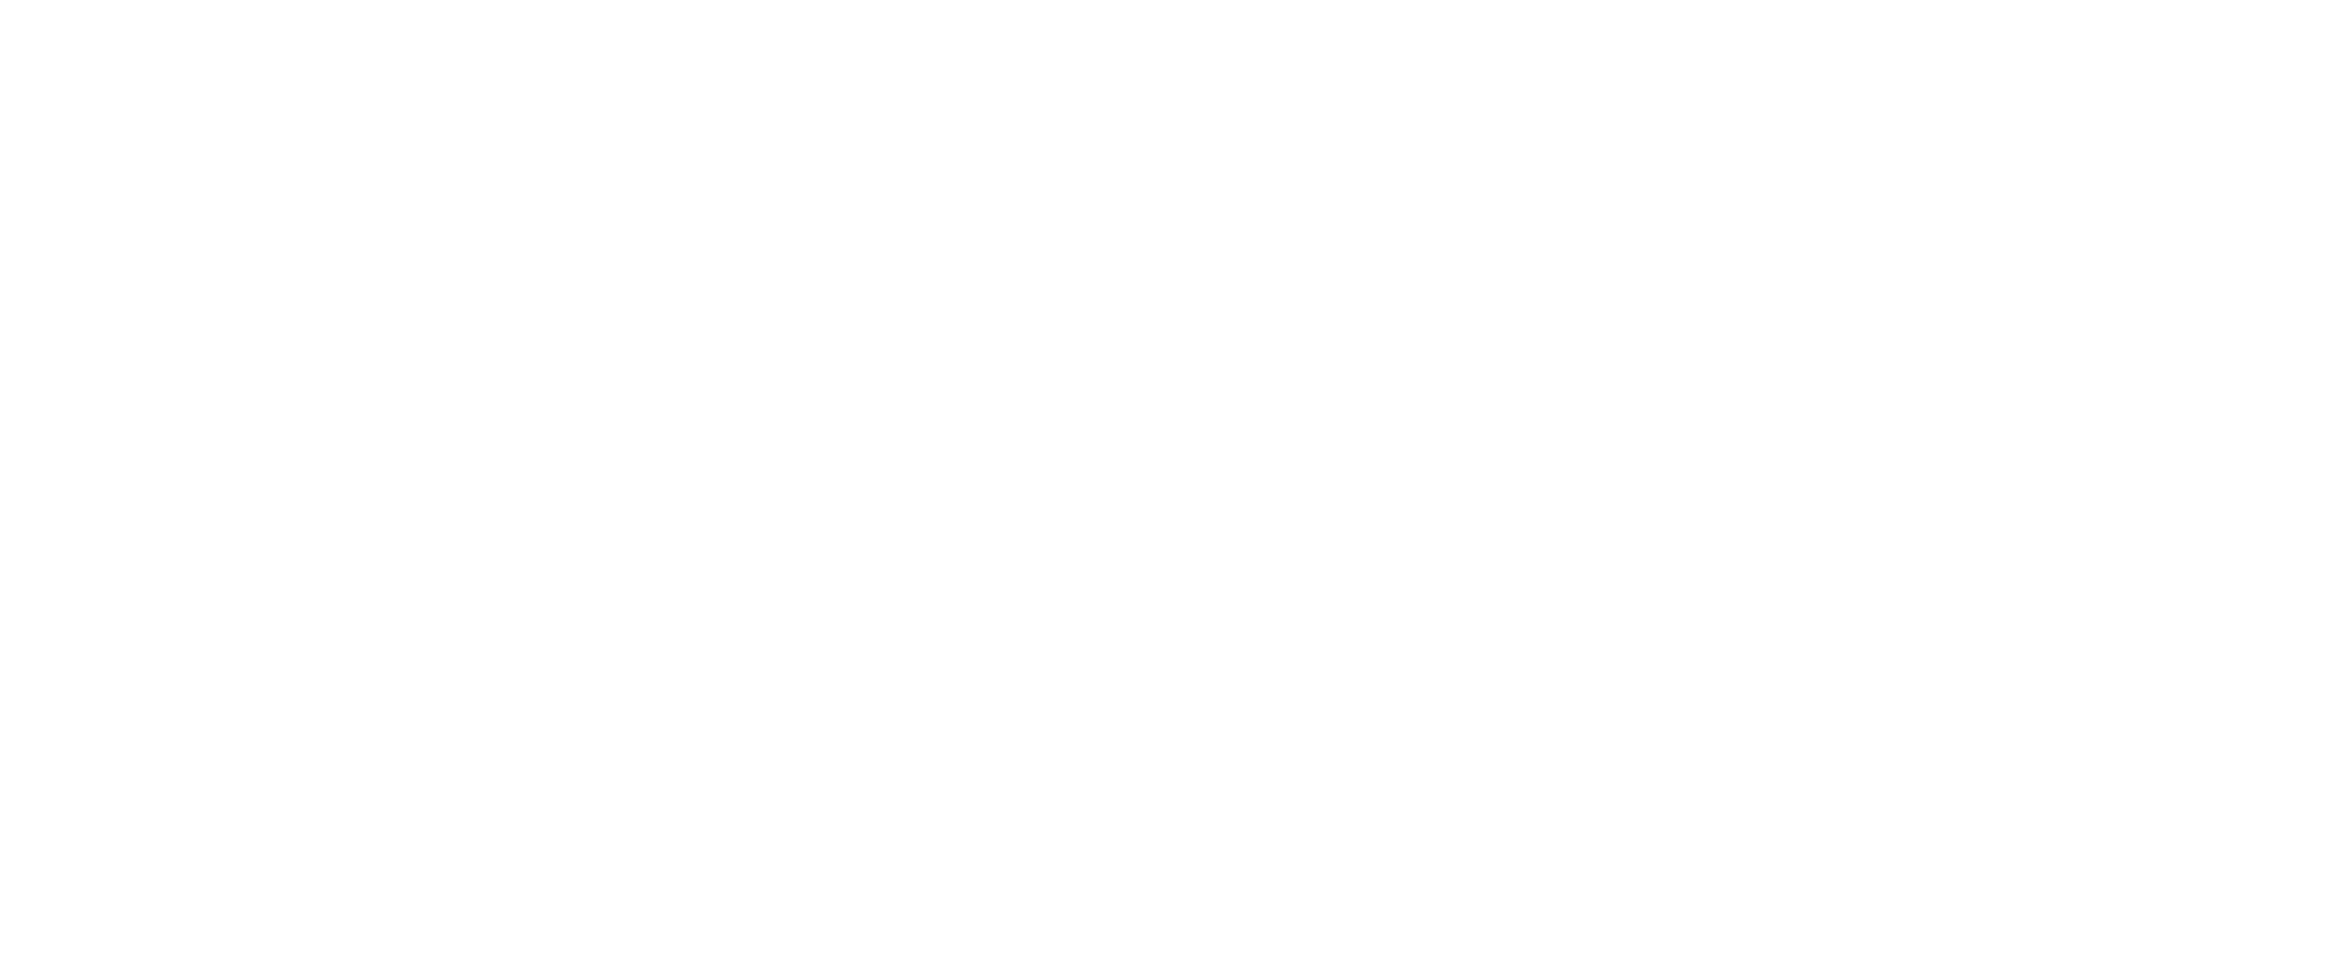 DVW Logo: Descriptive Video Works in white.